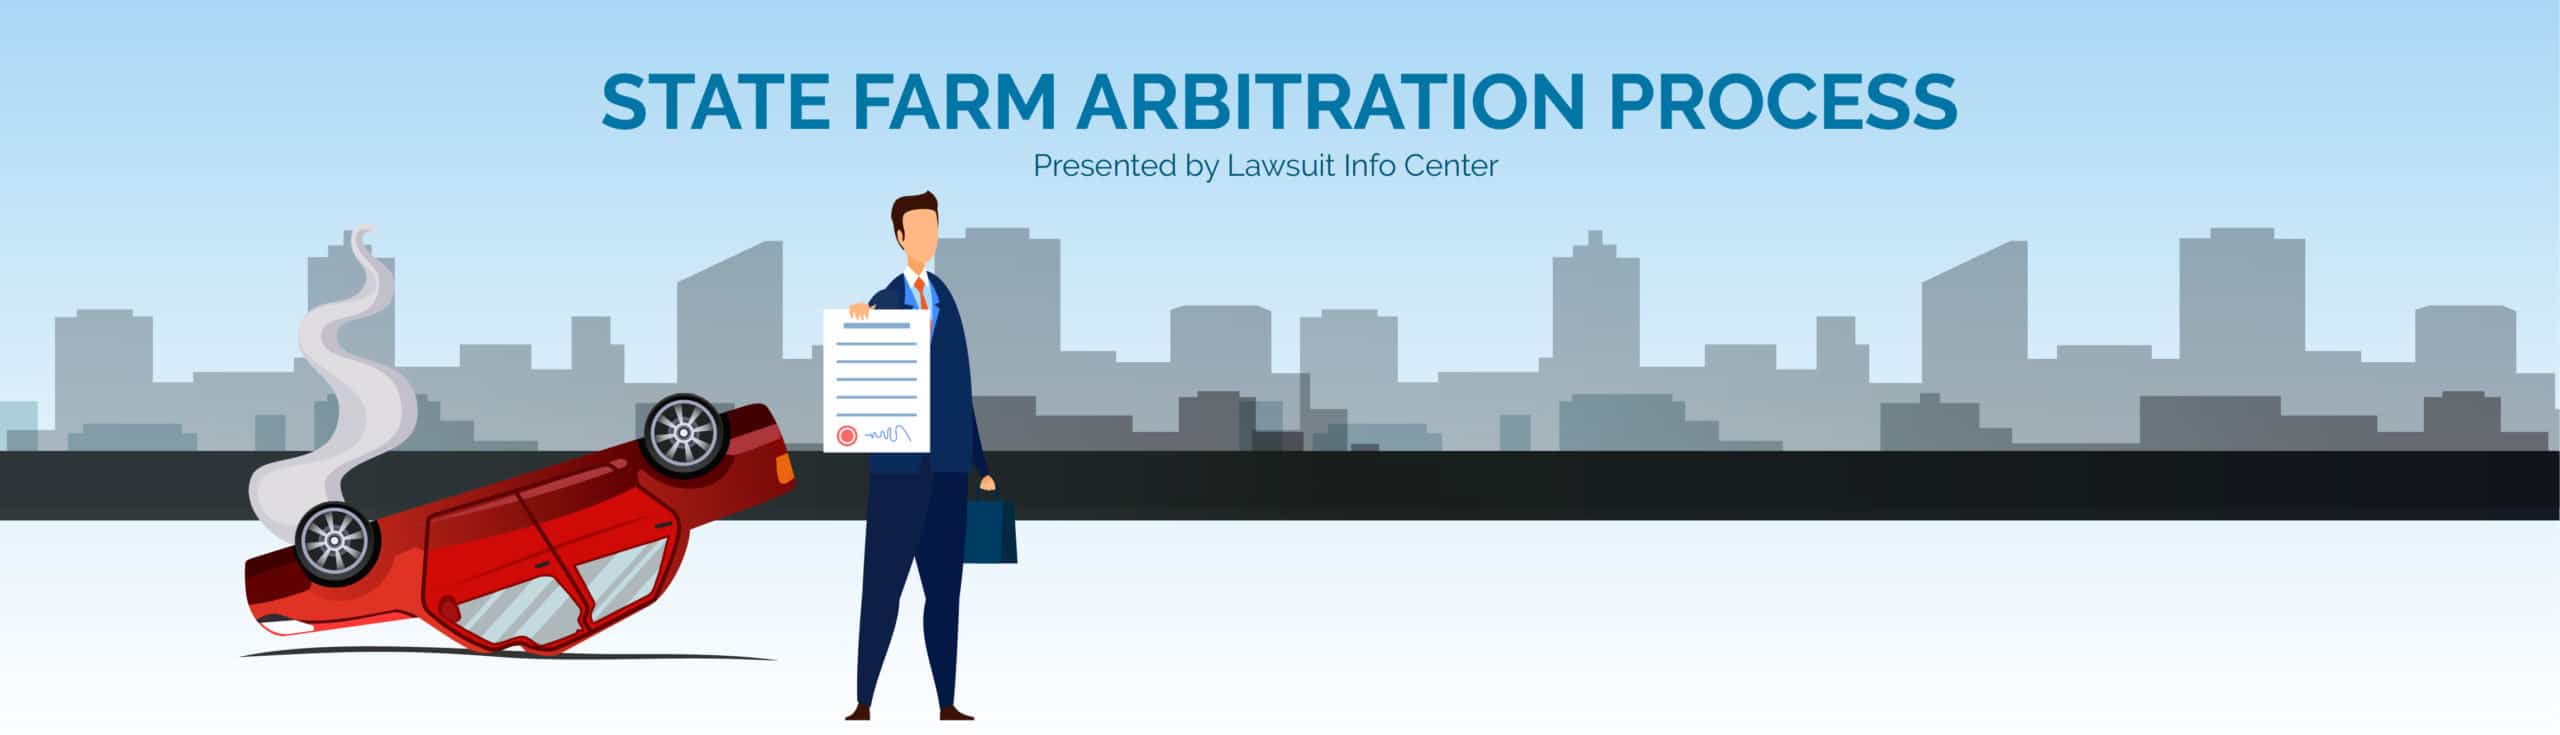 State Farm Arbitration Process